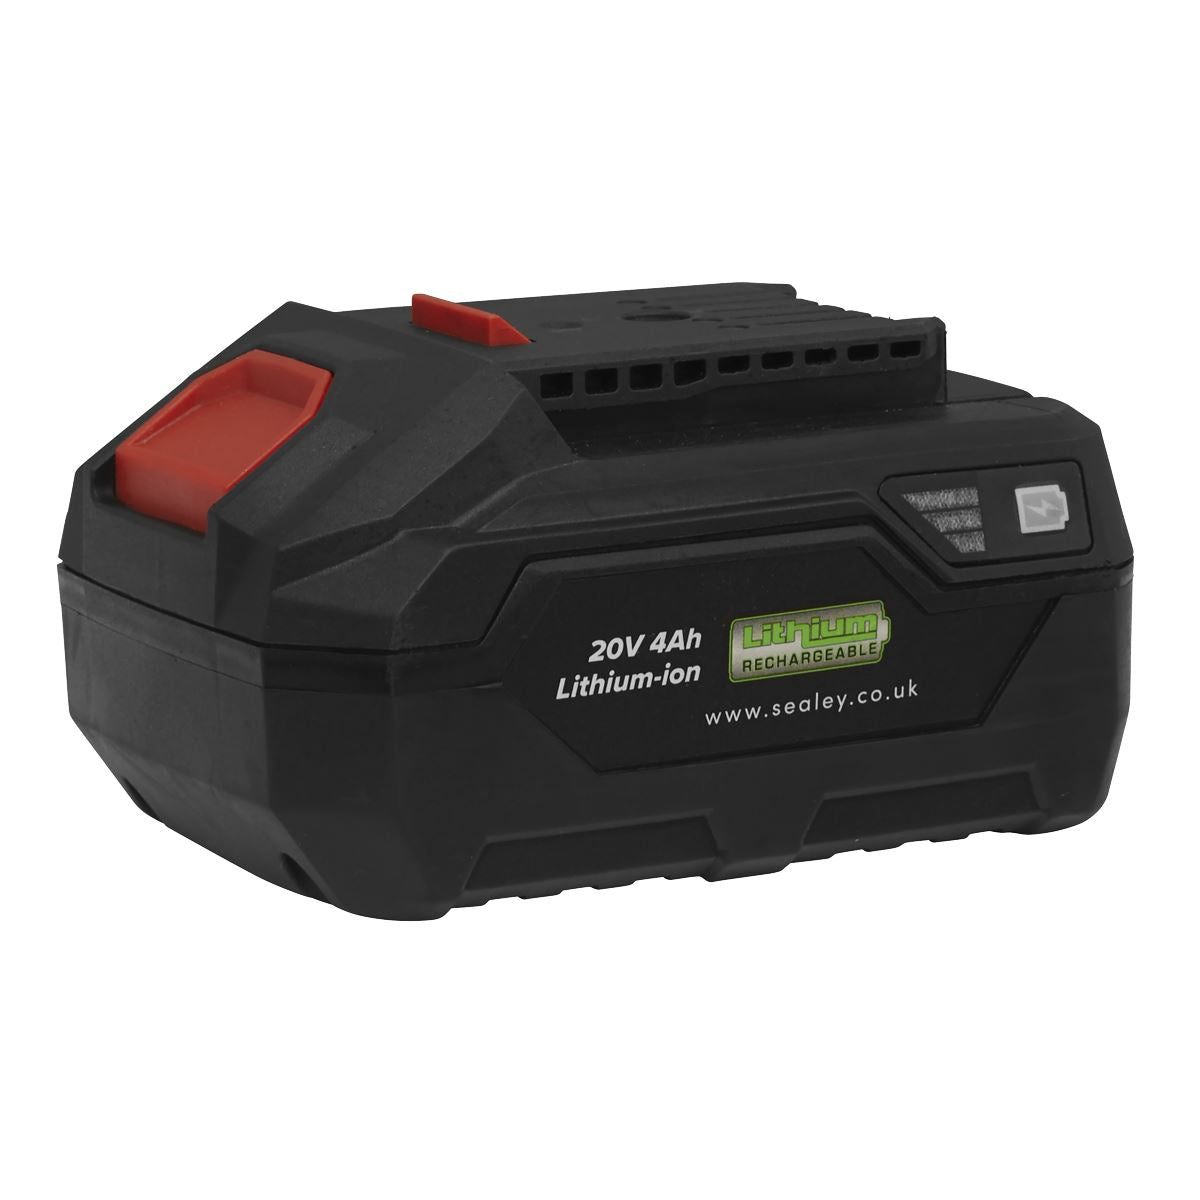 Sealey Cordless Handheld Vacuum Cleaner 650ml 20V Kit - 2 Batteries CP20VCVKIT